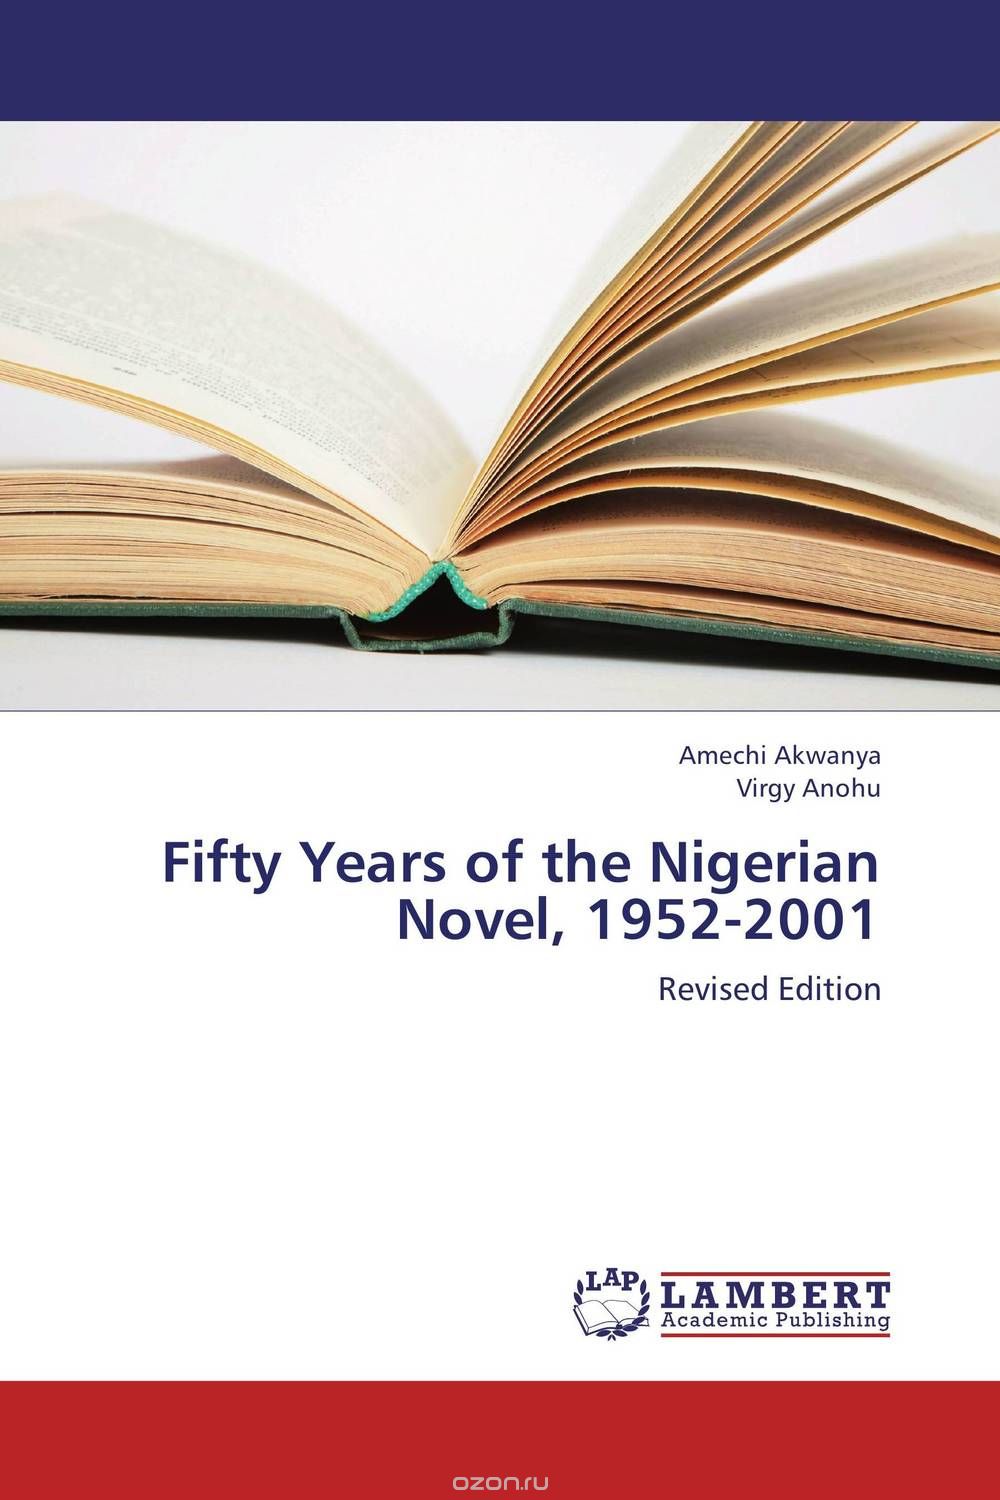 Скачать книгу "Fifty Years of the Nigerian Novel, 1952-2001"